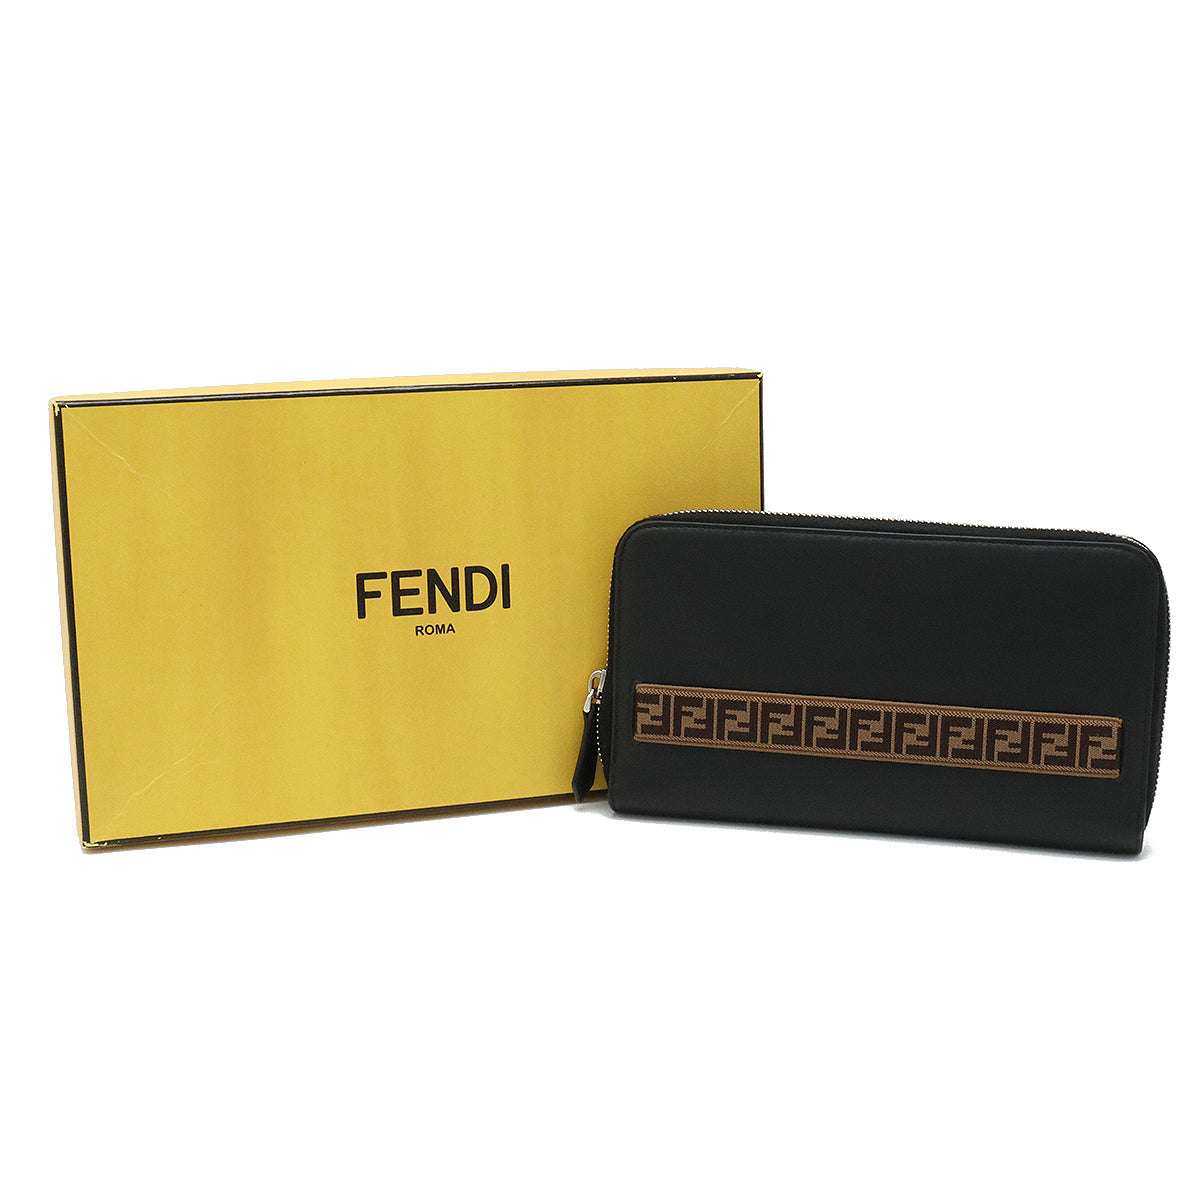 Fendi Roundfashner Long Wallet Travel Wallet Organizer Leather Black Black Silver Gold 7M0276